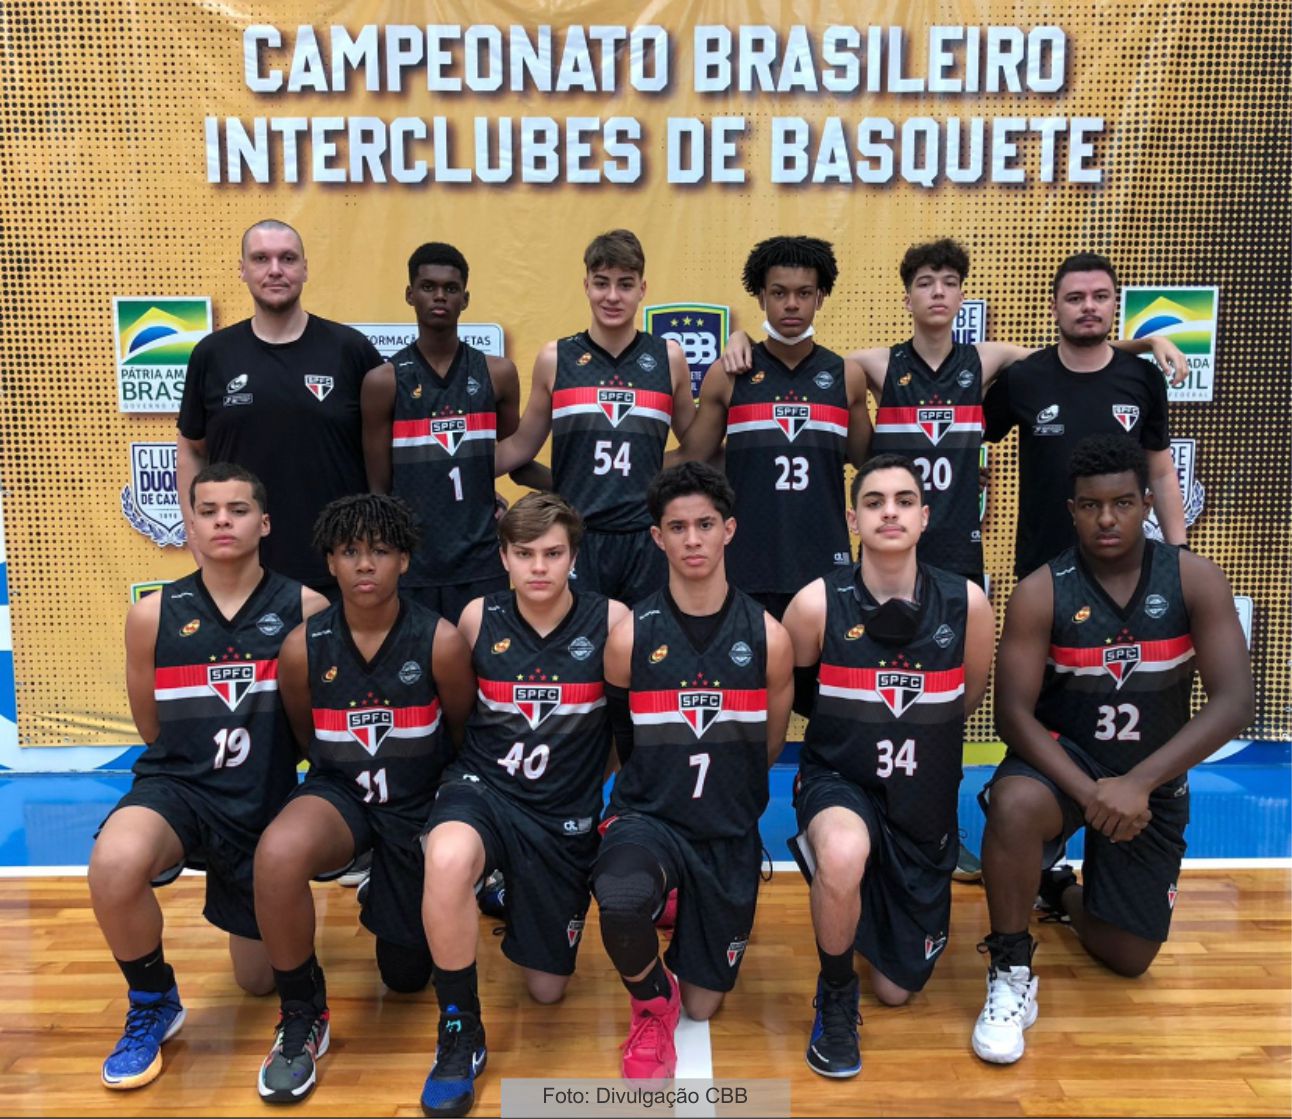 Campeonato Brasileiro Interclubes® de Basquetebol Basquetebol Sub 14 Masculino - Etapa Classificatória B